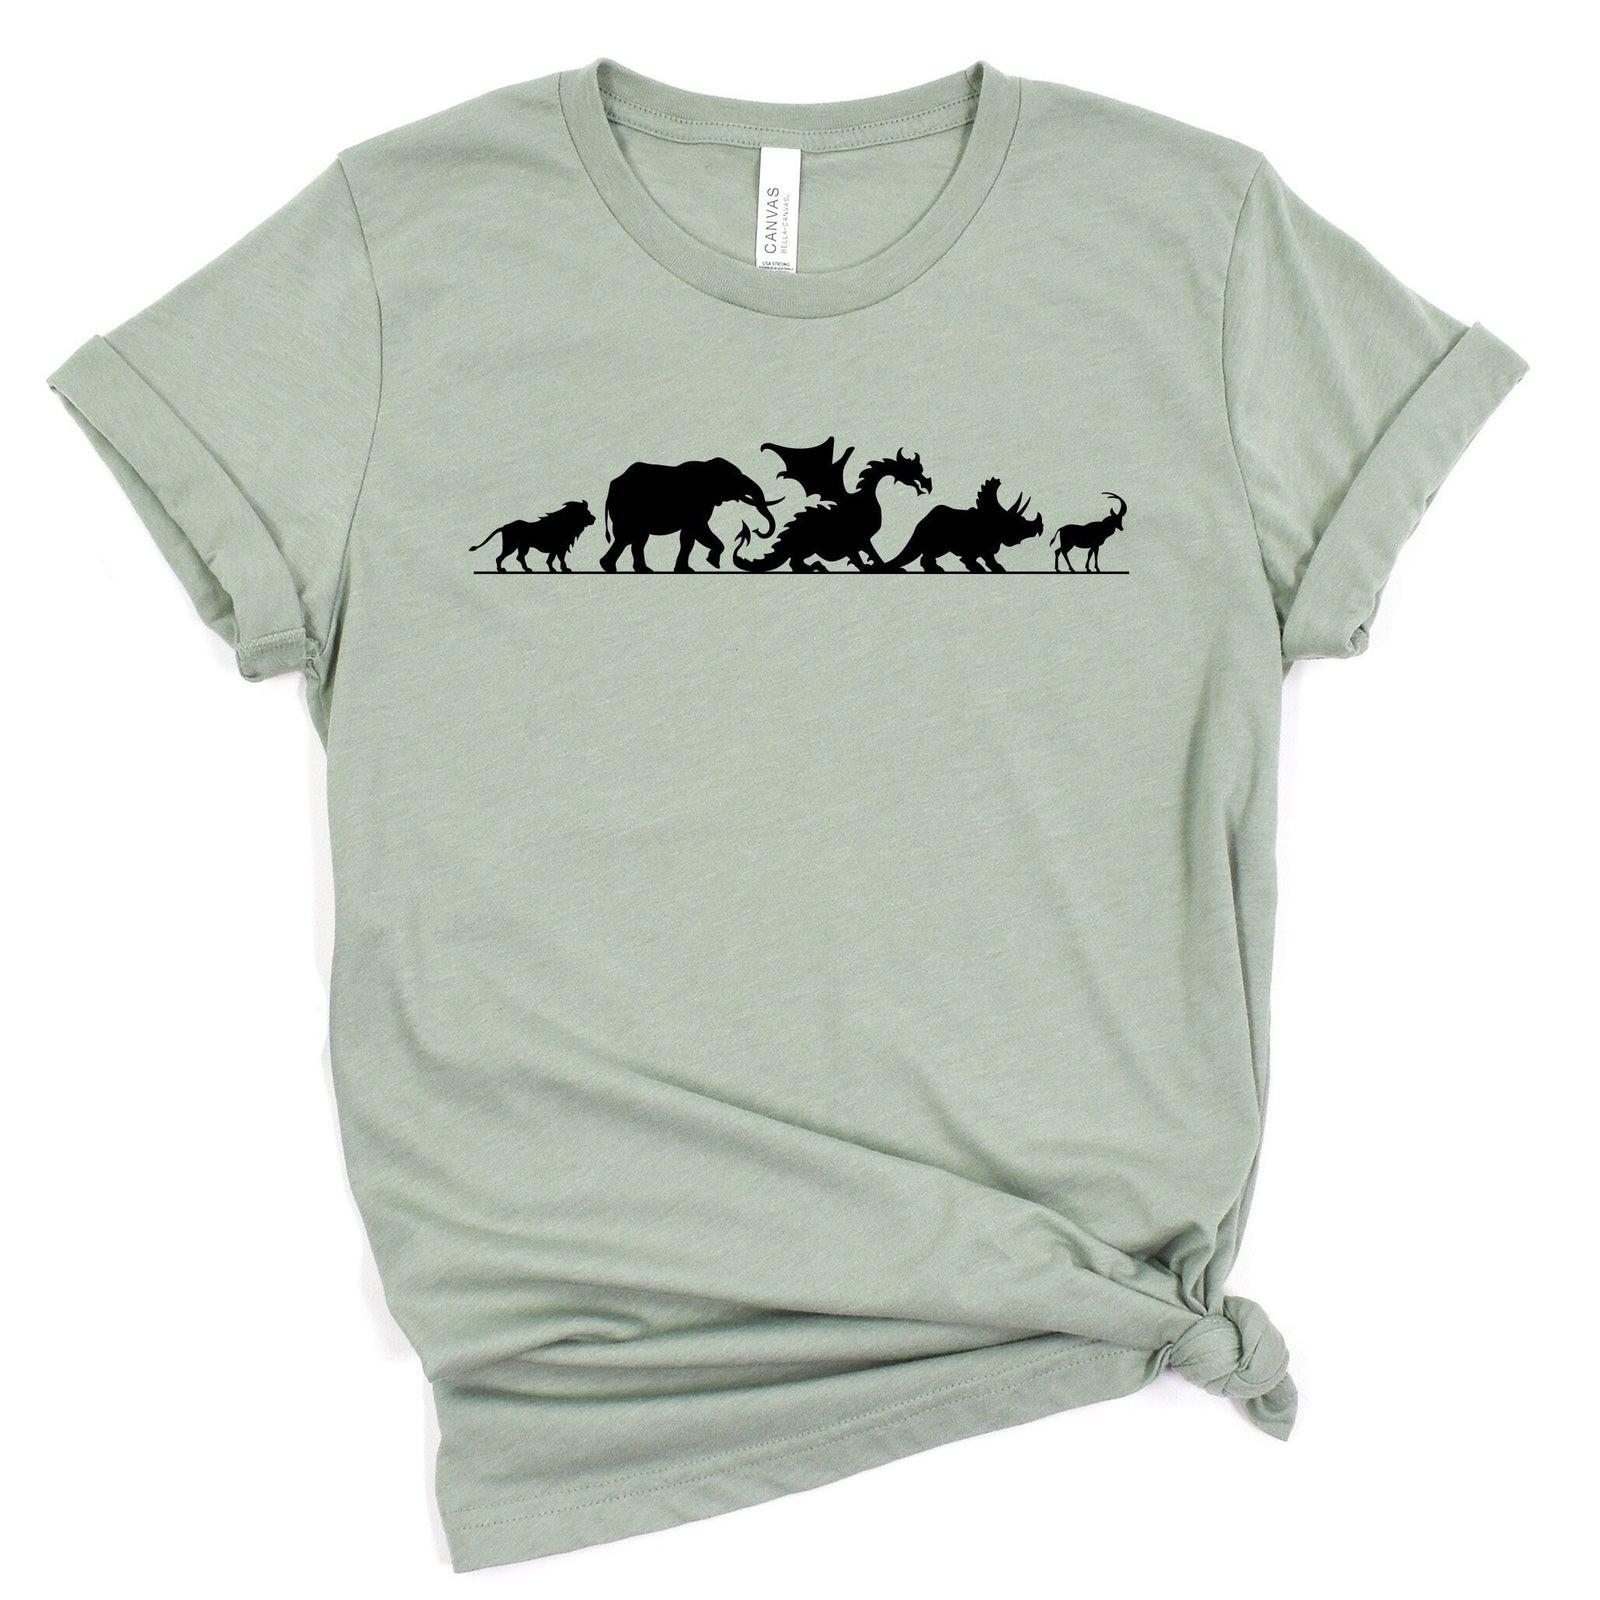 Safari Animals Adult T Shirt - Disney Trip Matching Shirts - Animal Kingdom Graphic Tee